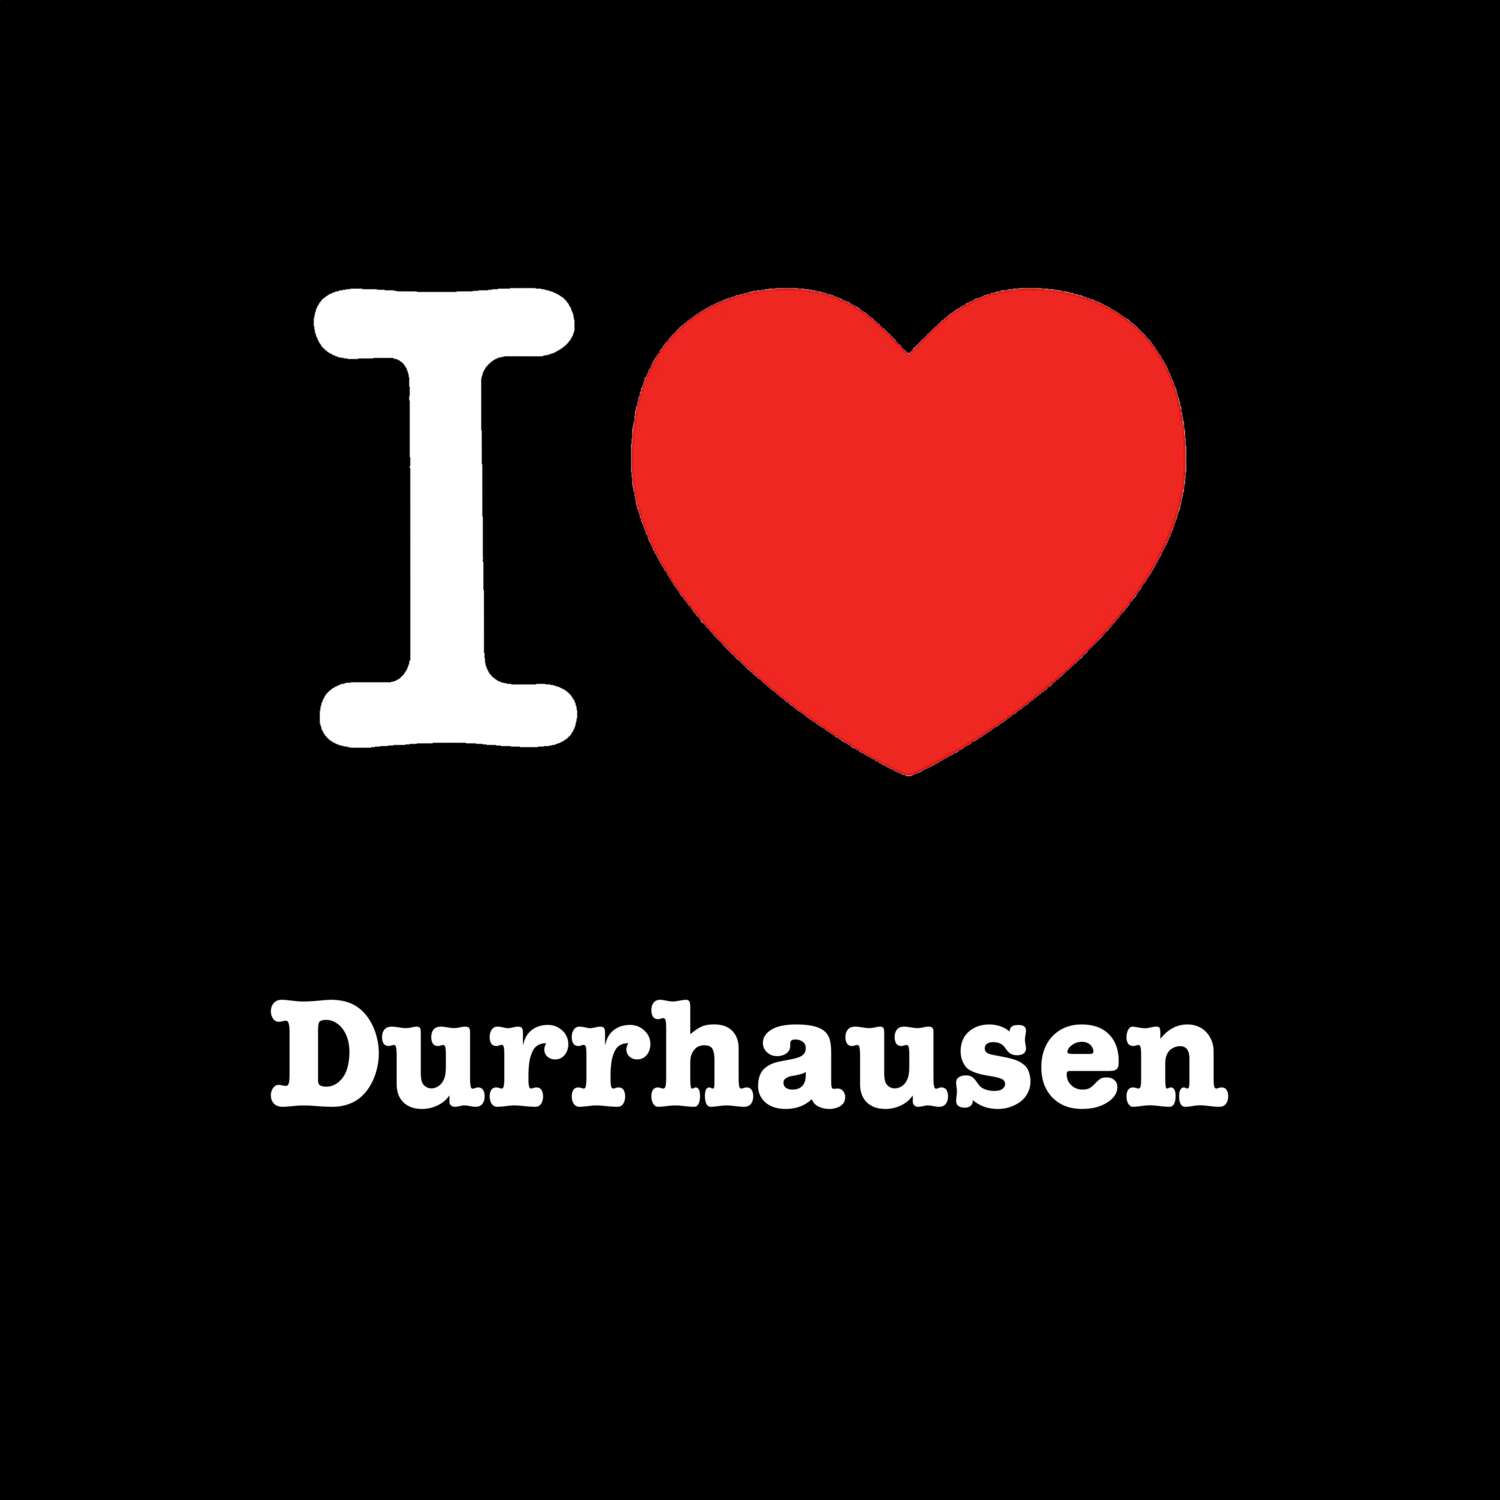 Durrhausen T-Shirt »I love«